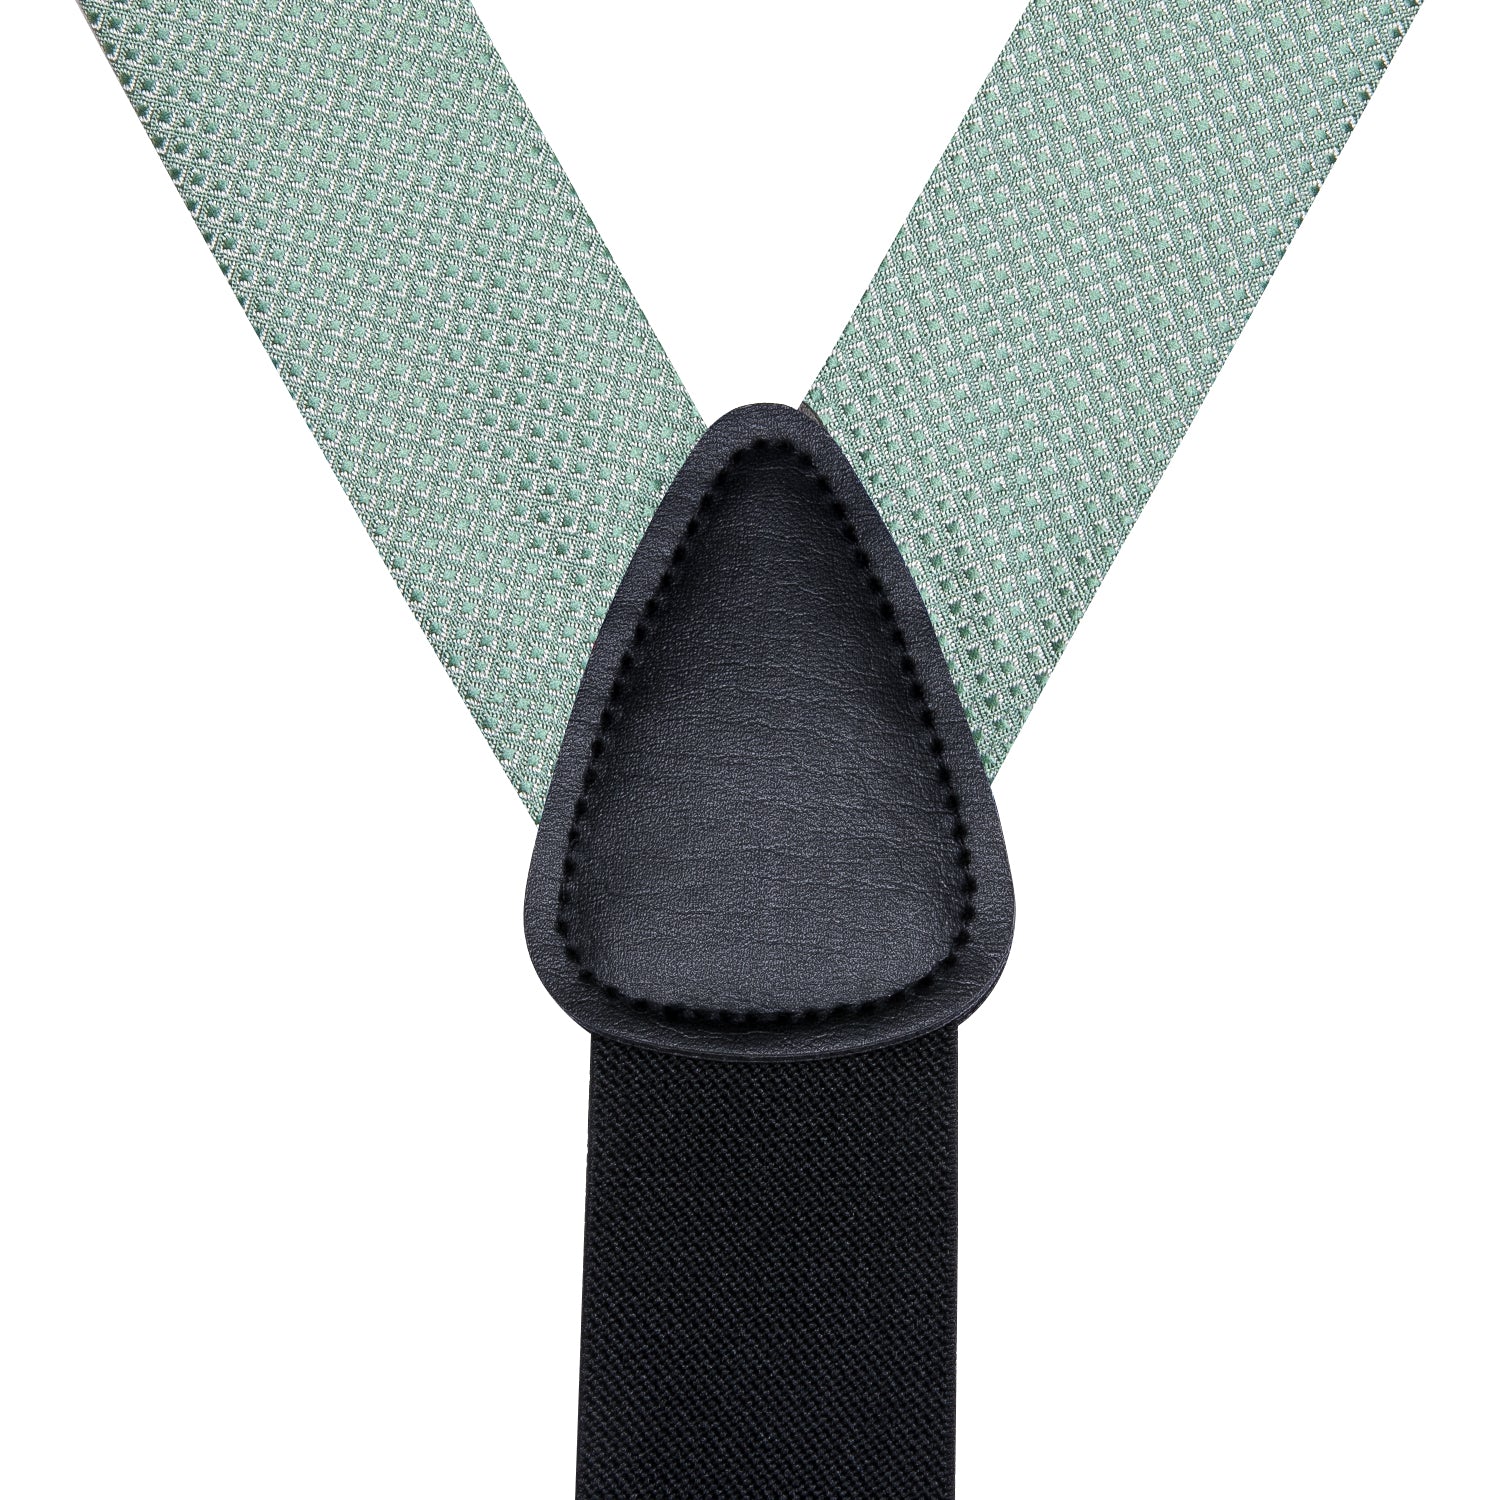 Mint Green Solid Suspender Bowtie Hanky Cufflinks Set